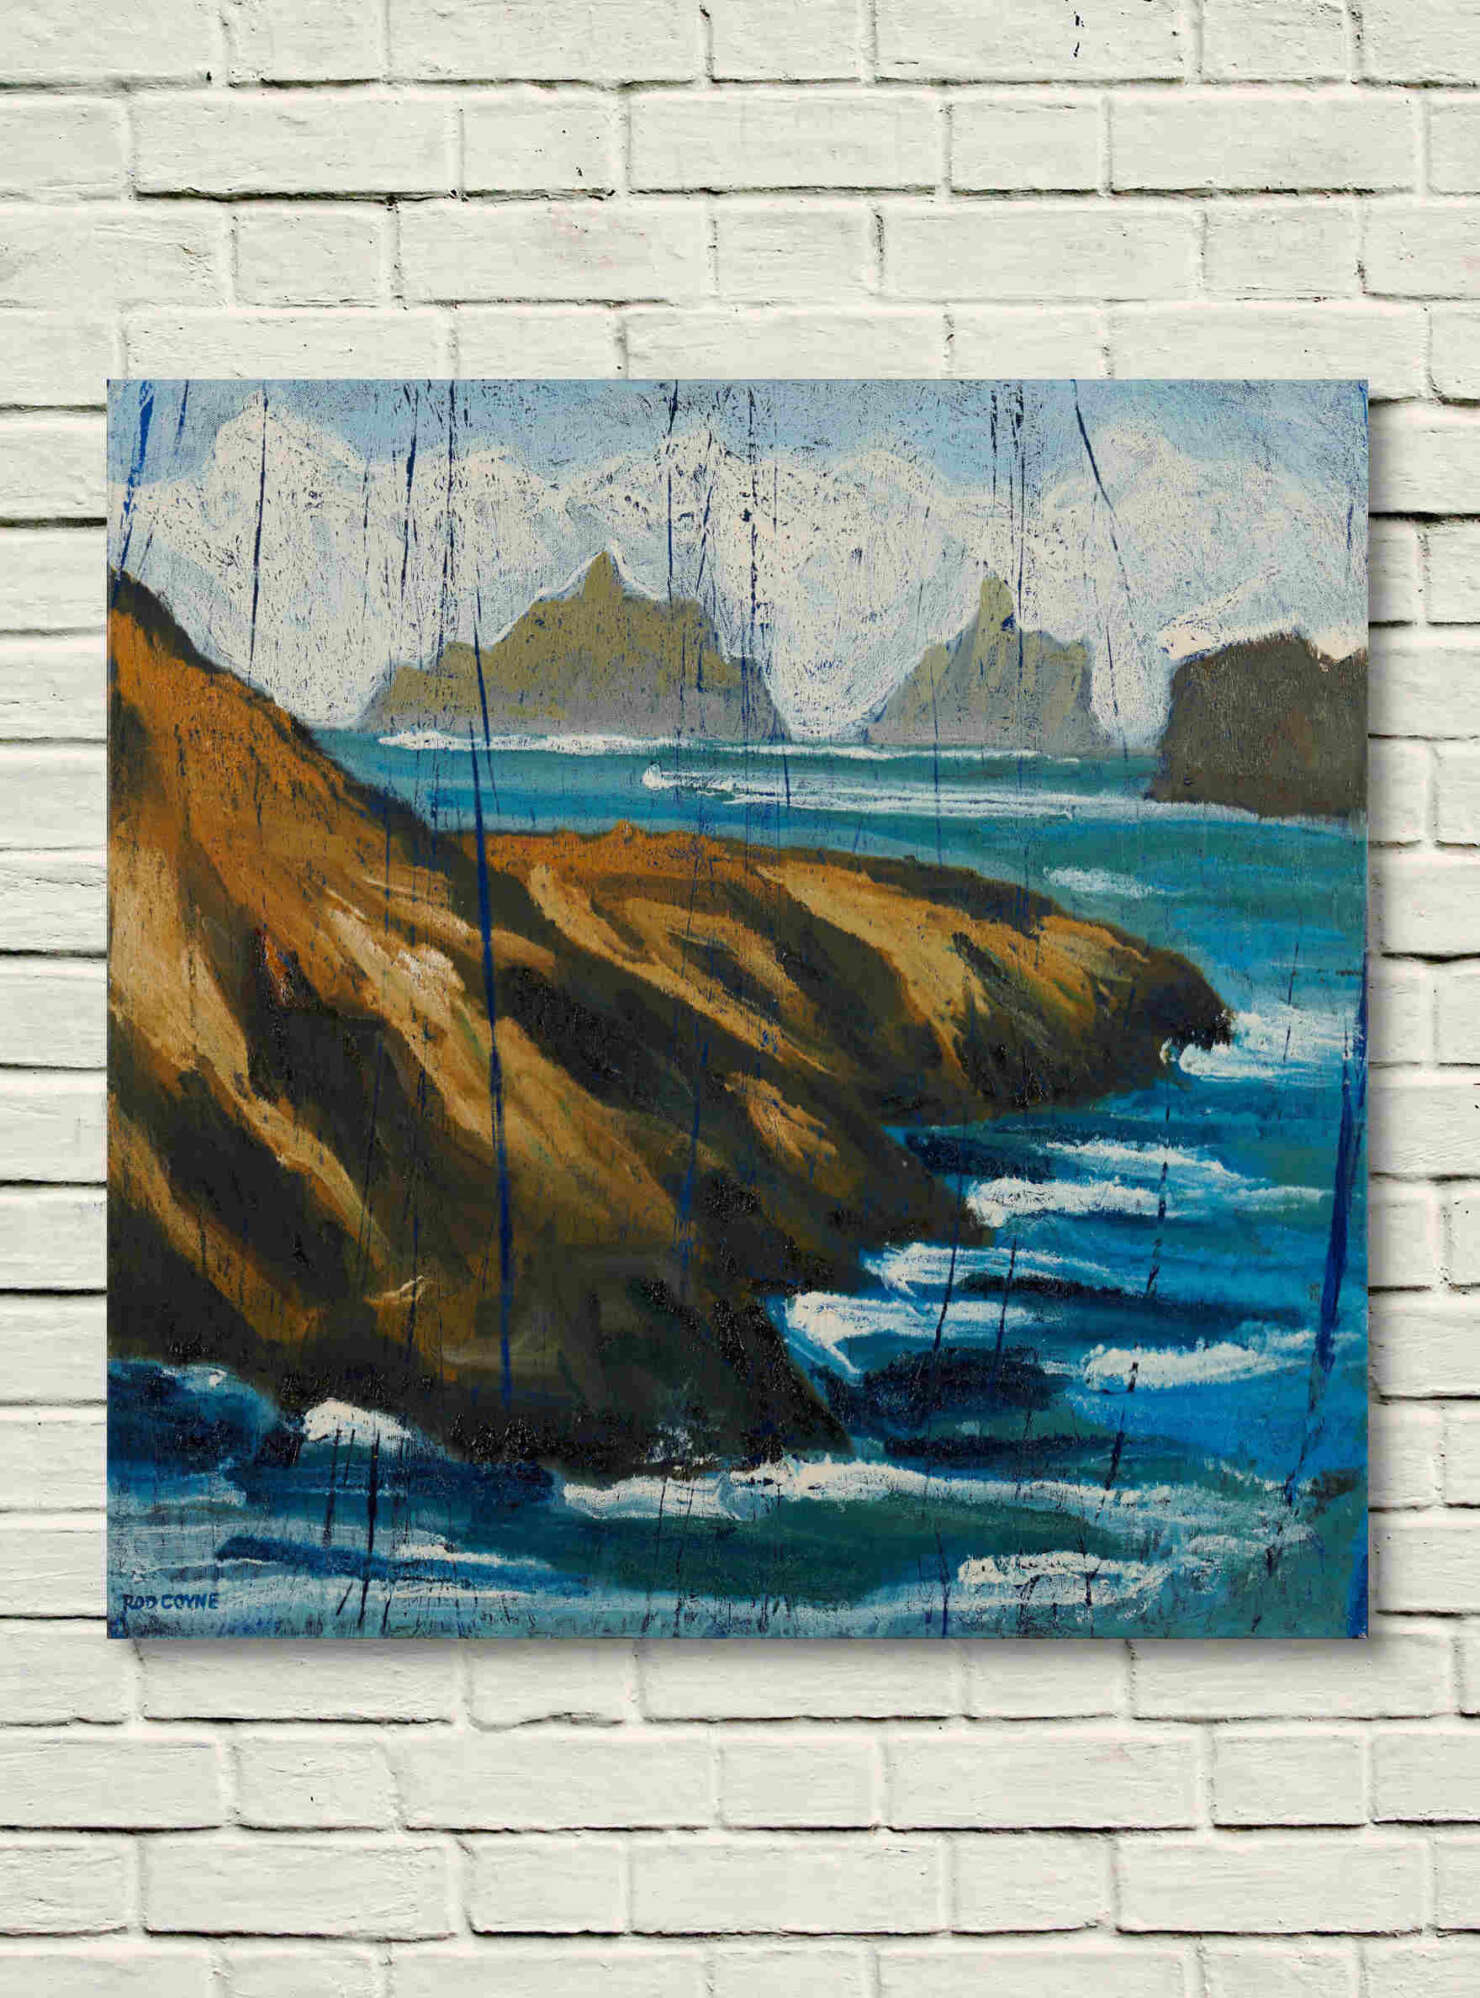 artist rod coyne's seascape "Kerry Islands" is shown here, unframed on a white wall.